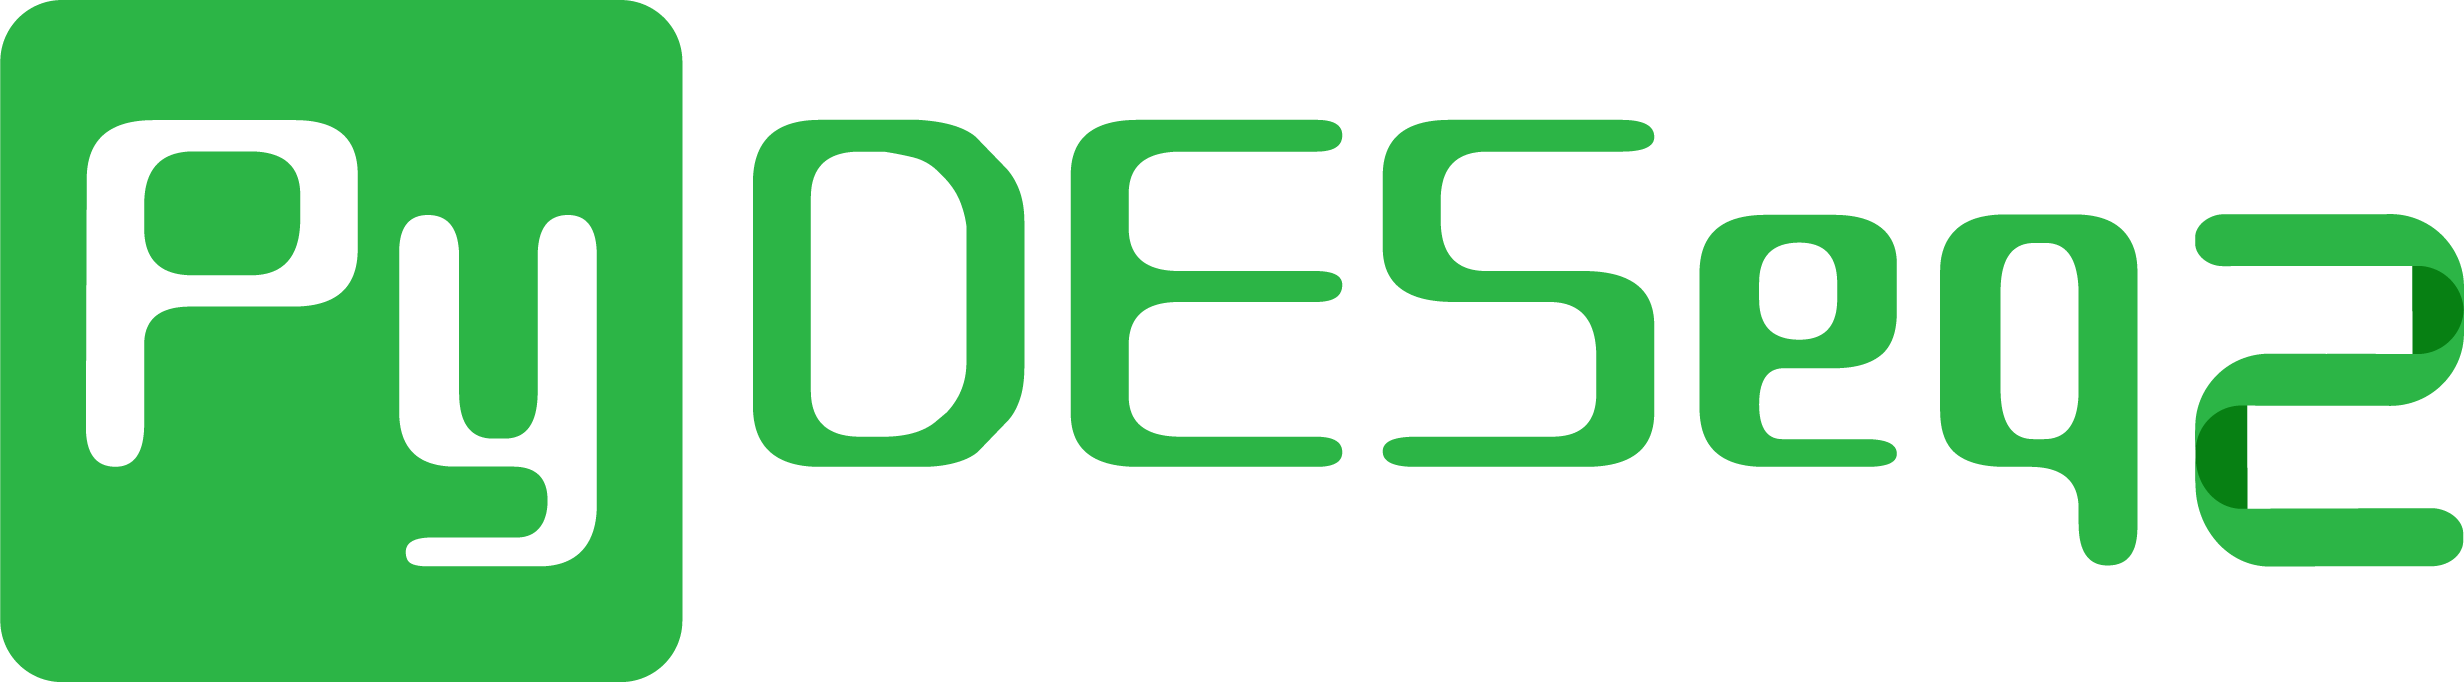 pydeseq2_logo_green.png